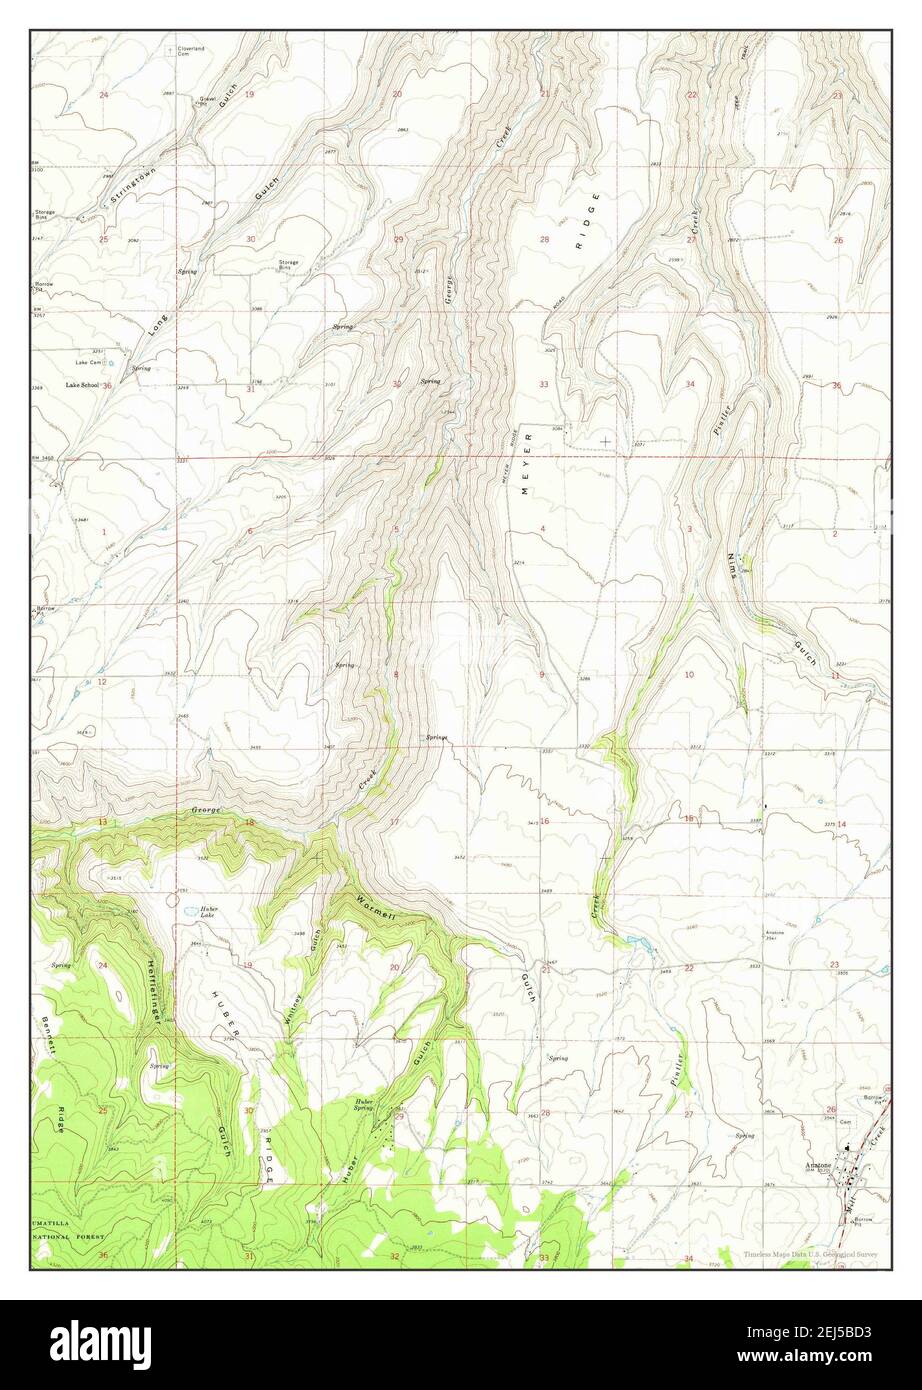 Anatone Washington Map 1971 124000 United States Of America By Timeless Maps Data Us 2808